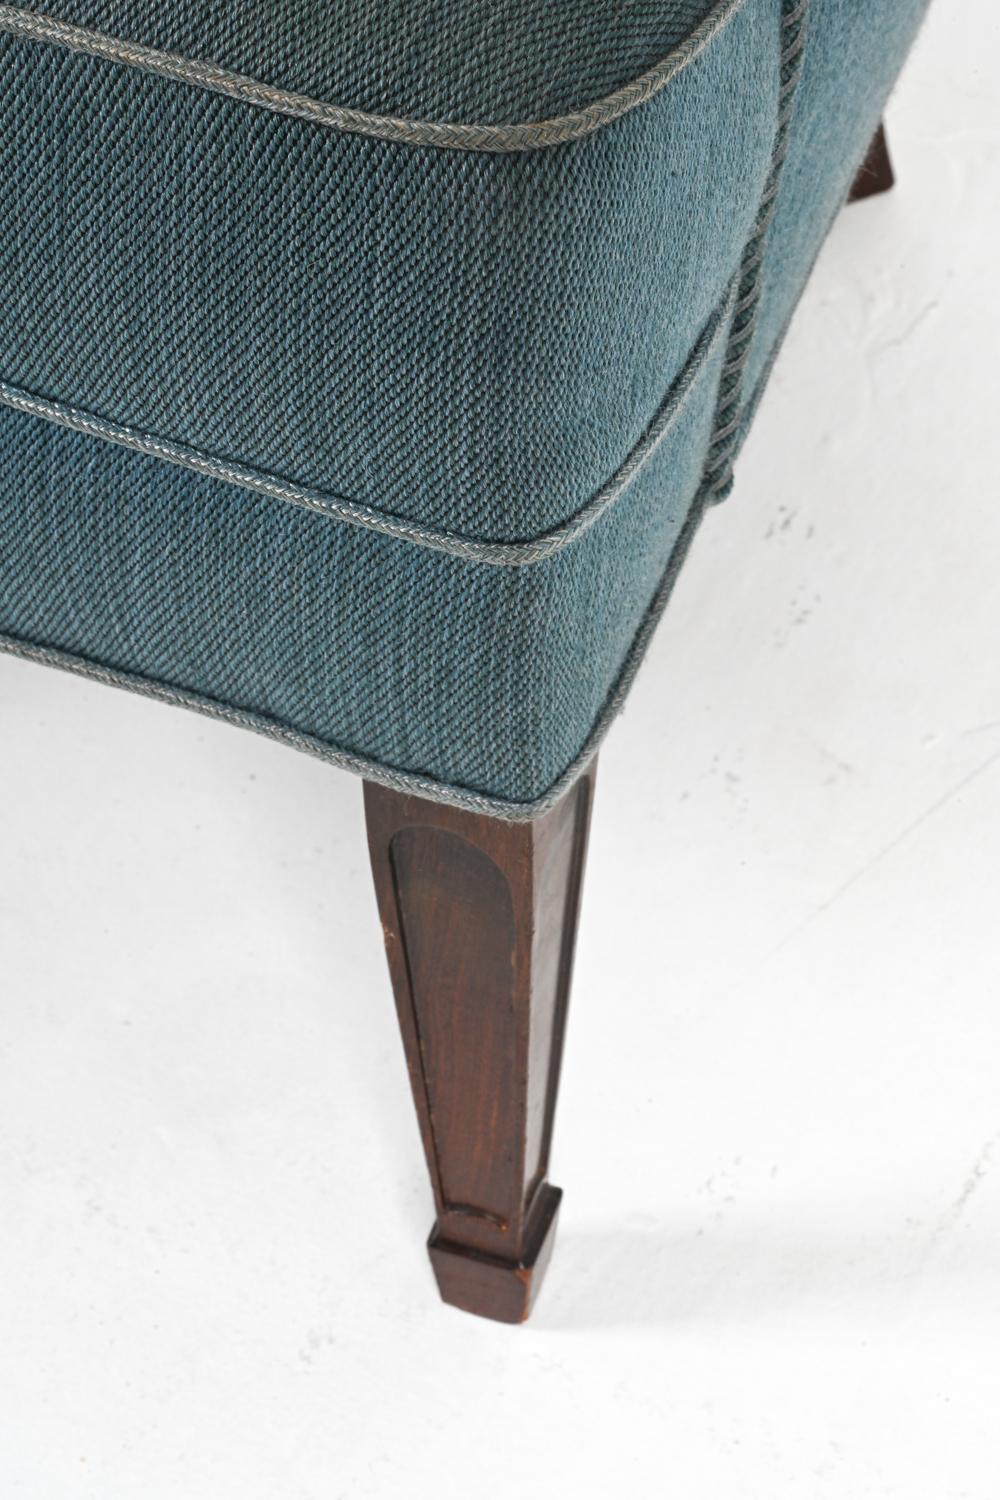 Frits Henningsen Easy Chairs aus Mahagoni, ca. 1940er Jahre, Paar (20. Jahrhundert) im Angebot